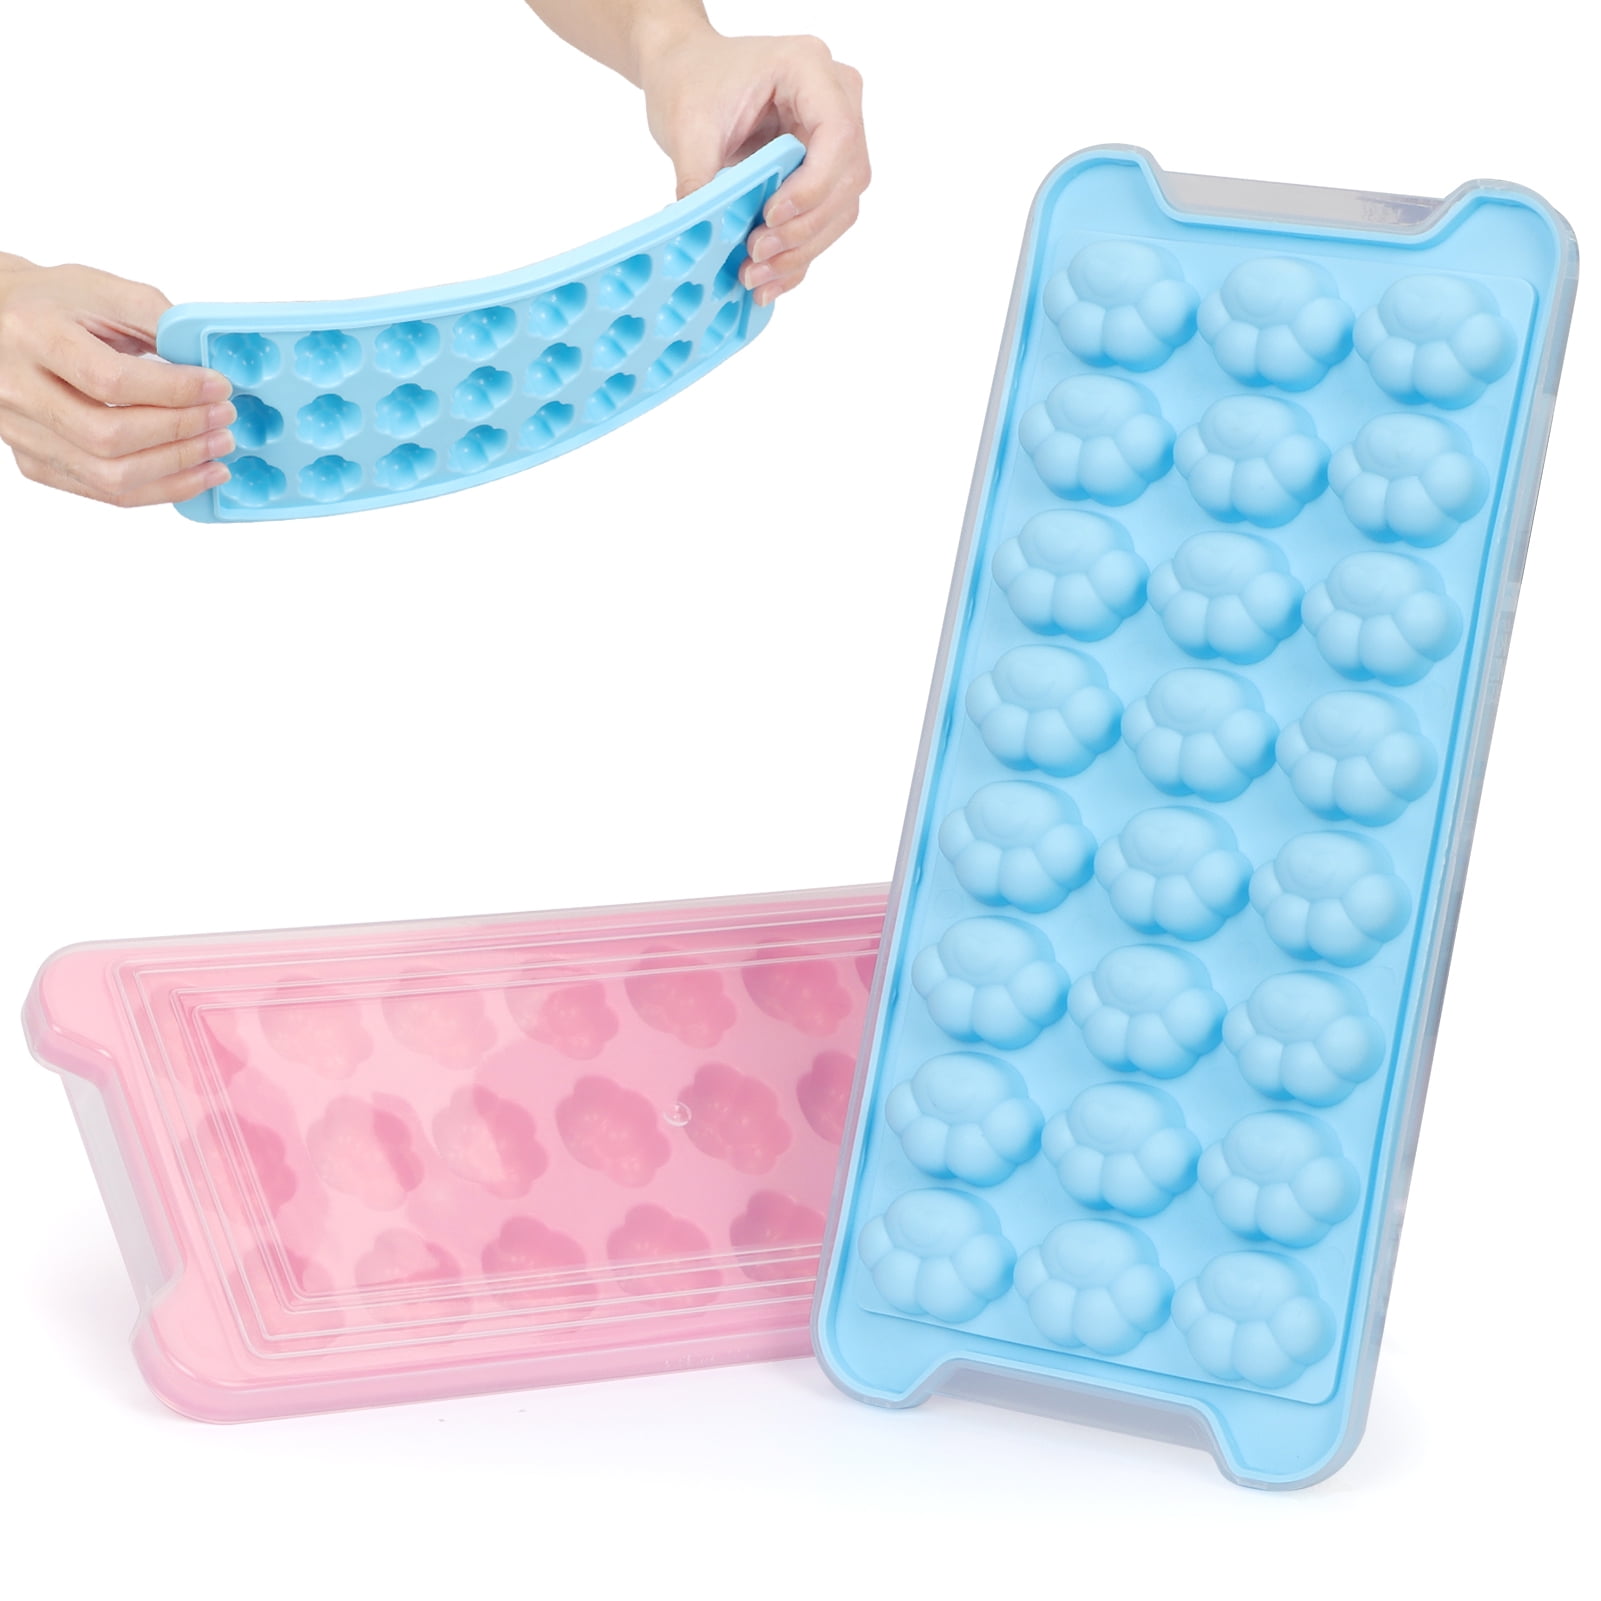 Silicone ice cube trays 2pcs Tsh 25,000/=